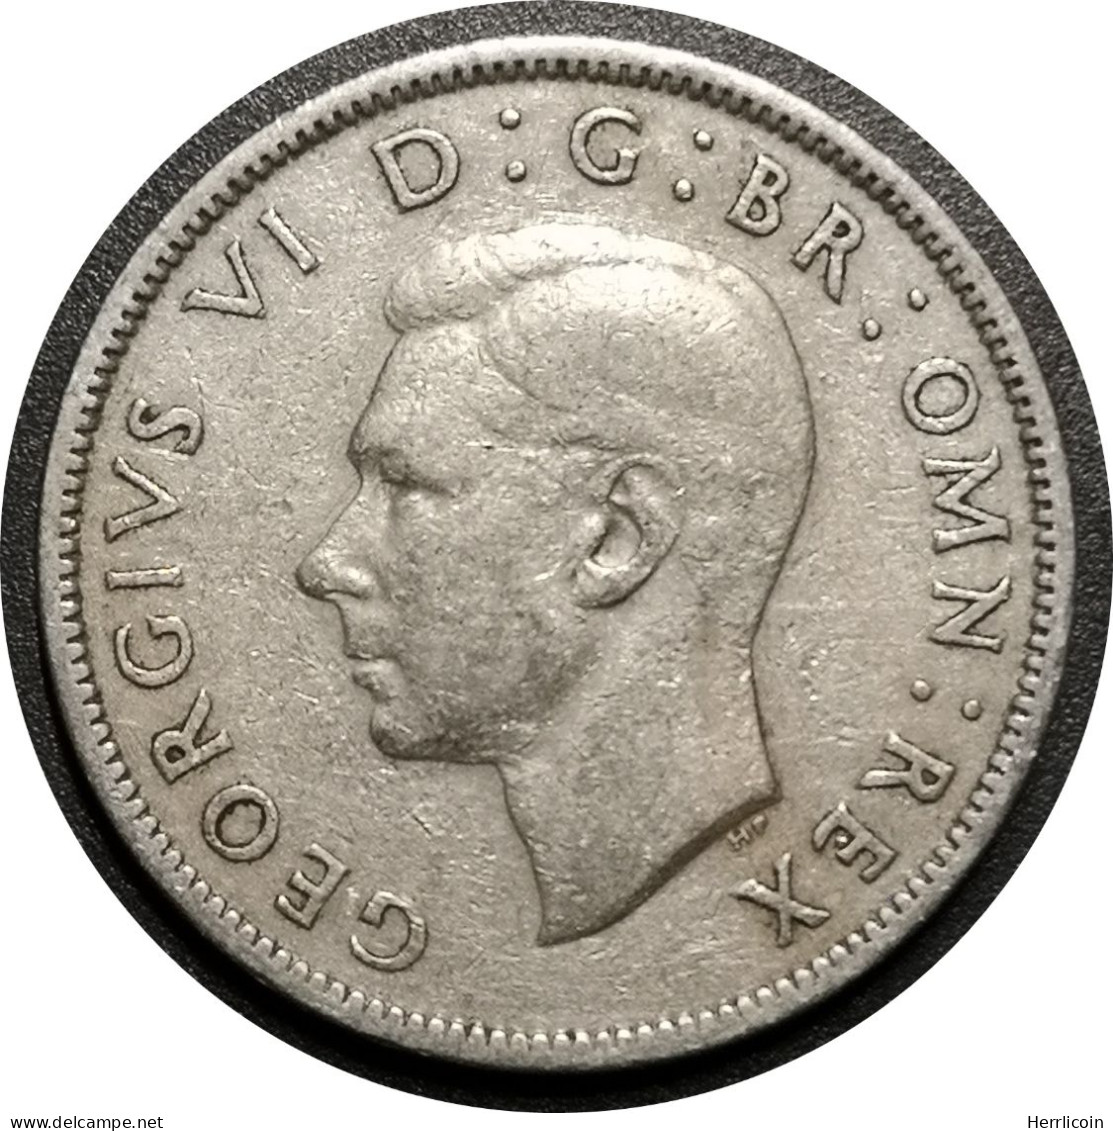 Monnaie Royaume-Uni - 1951 - 2 Shillings George VI Cupronickel - J. 1 Florin / 2 Schillings